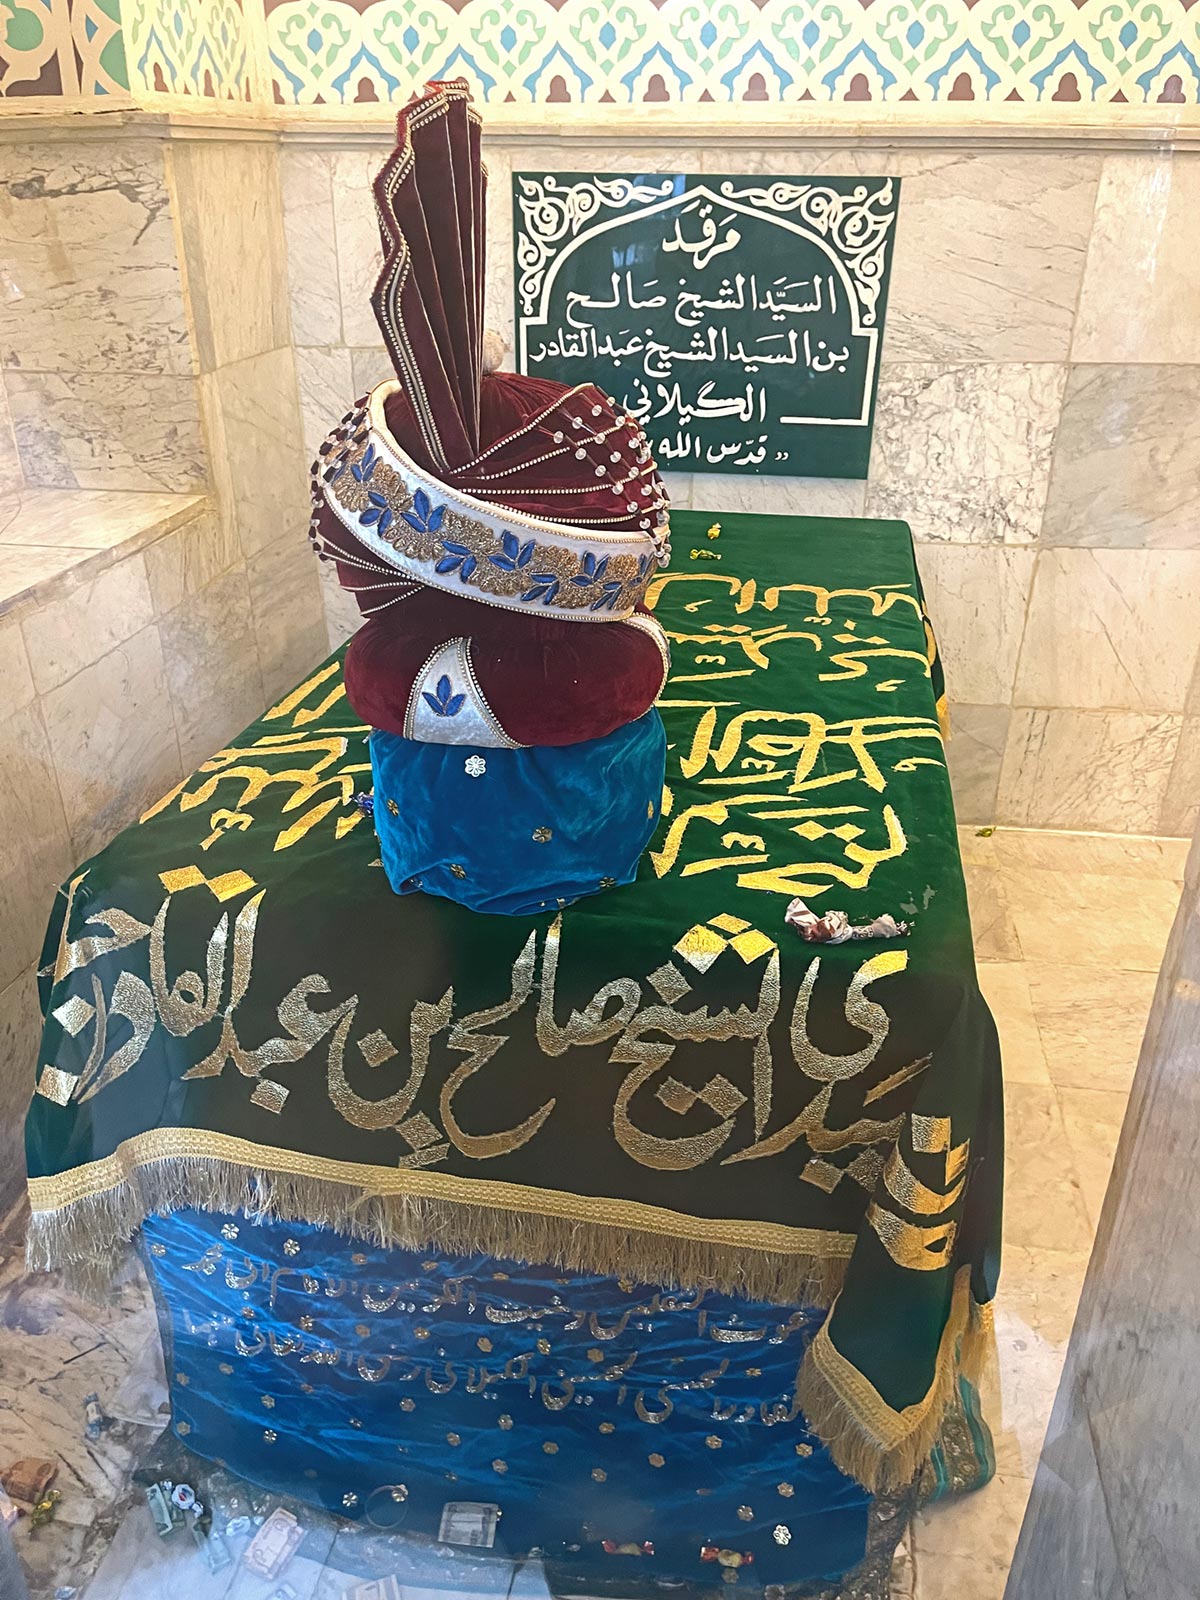 Tumba del jeque Salih, hijo de Abdul Qadir Gilani, en el mausoleo de Abdul Qadir Gilani, Bagdad